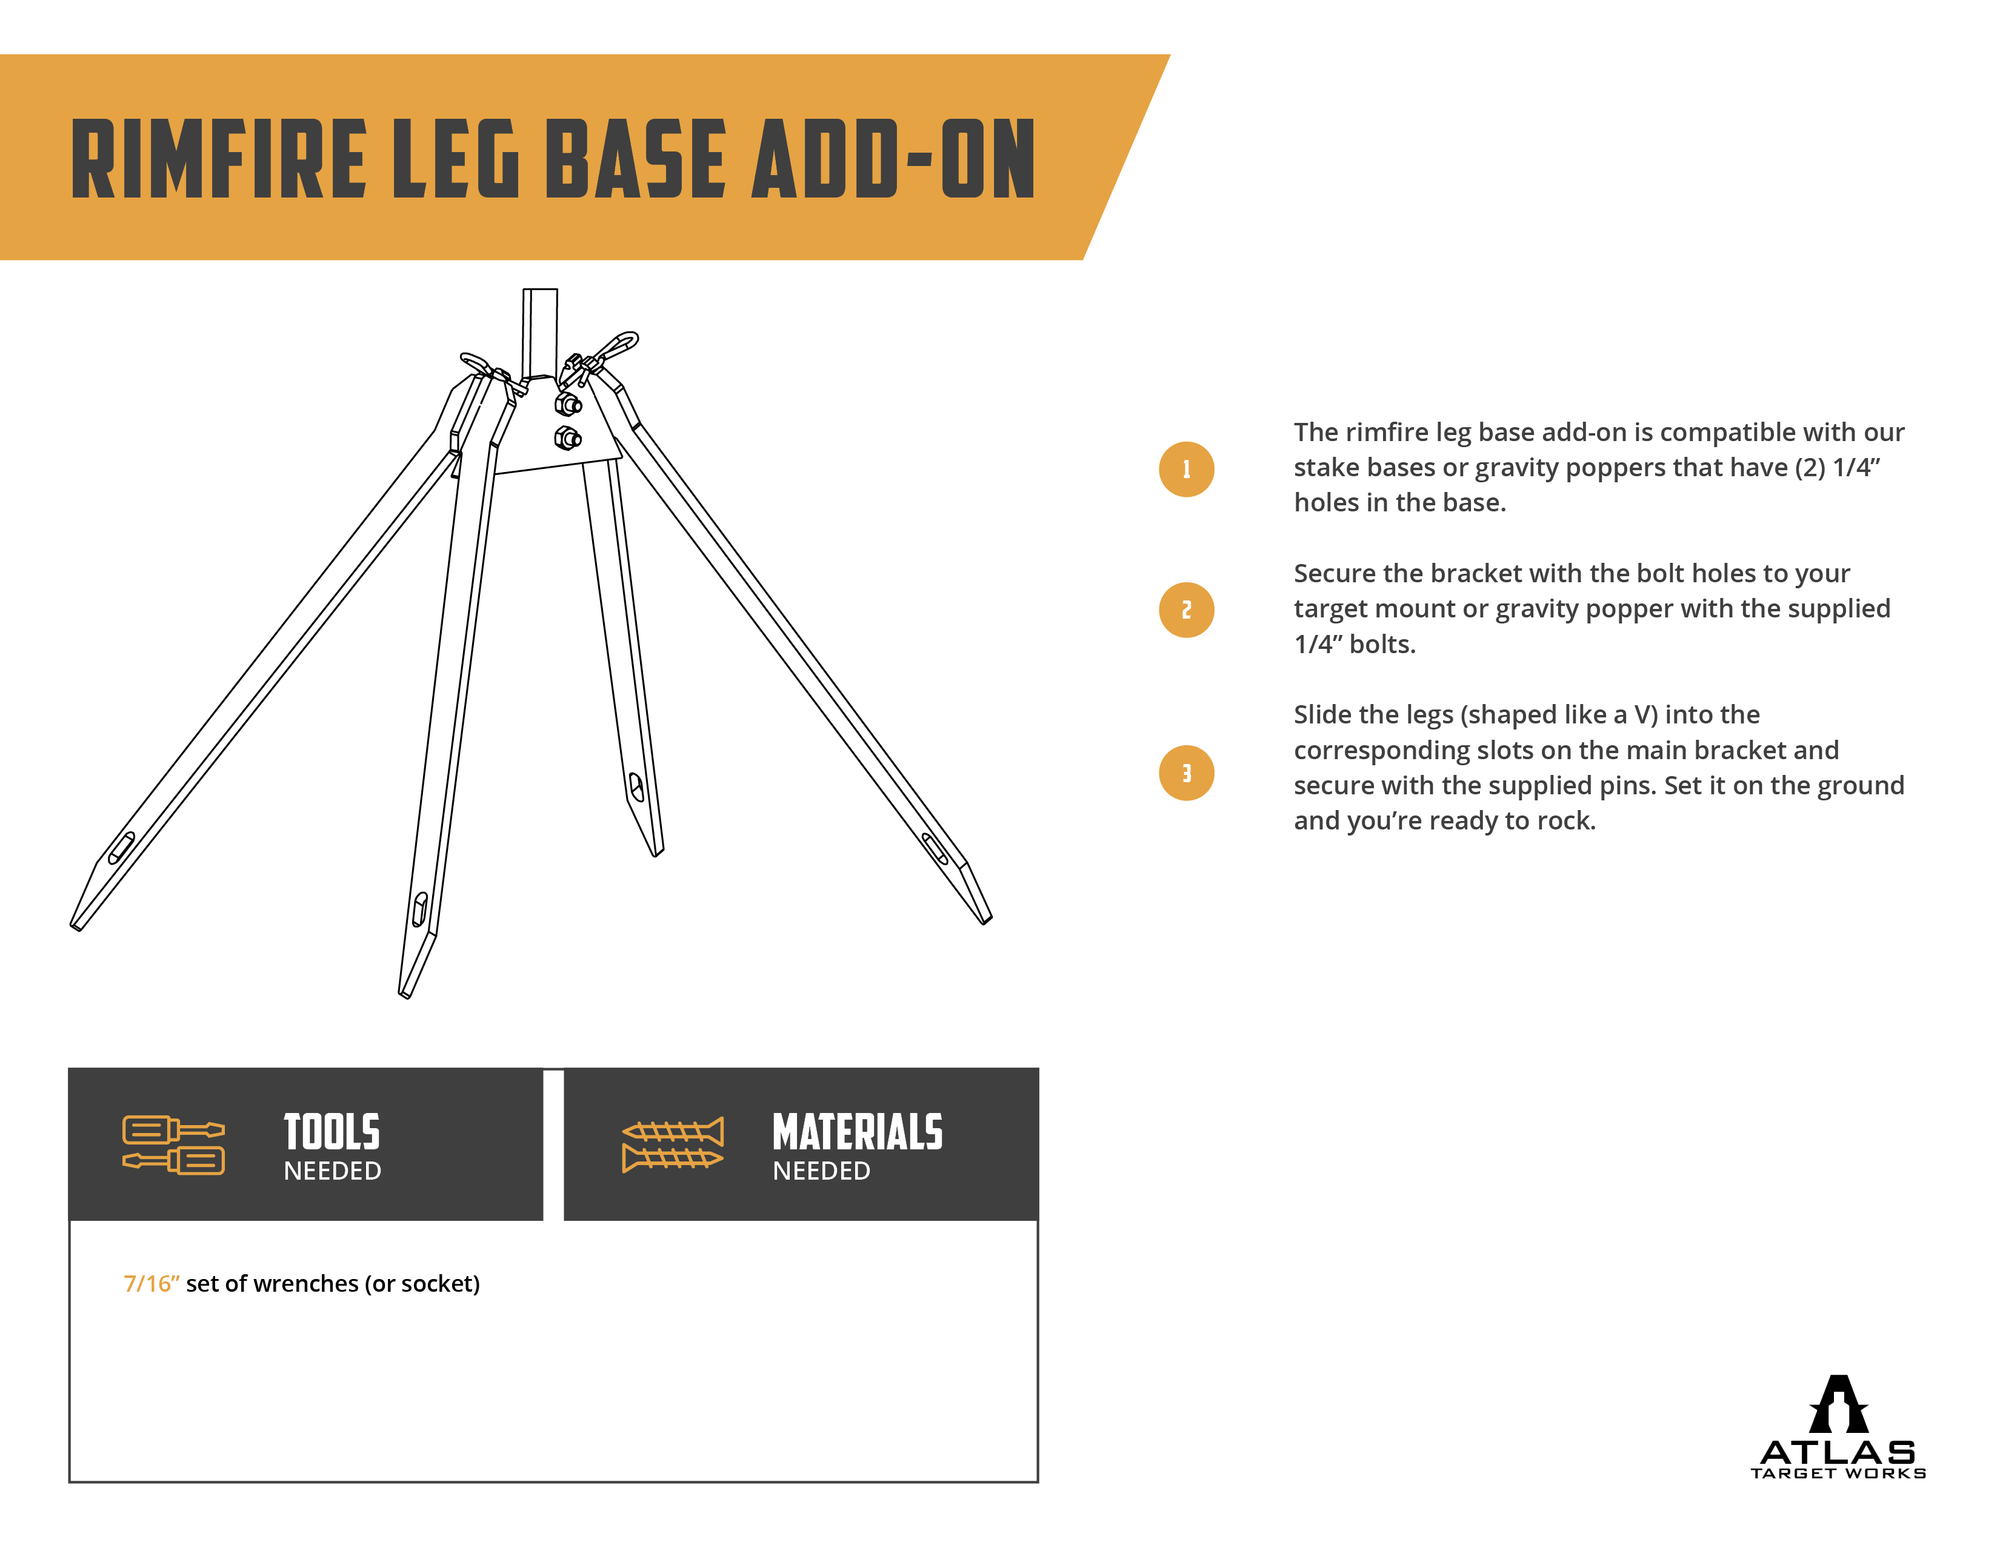 rimfire leg base add-on assembly instructions